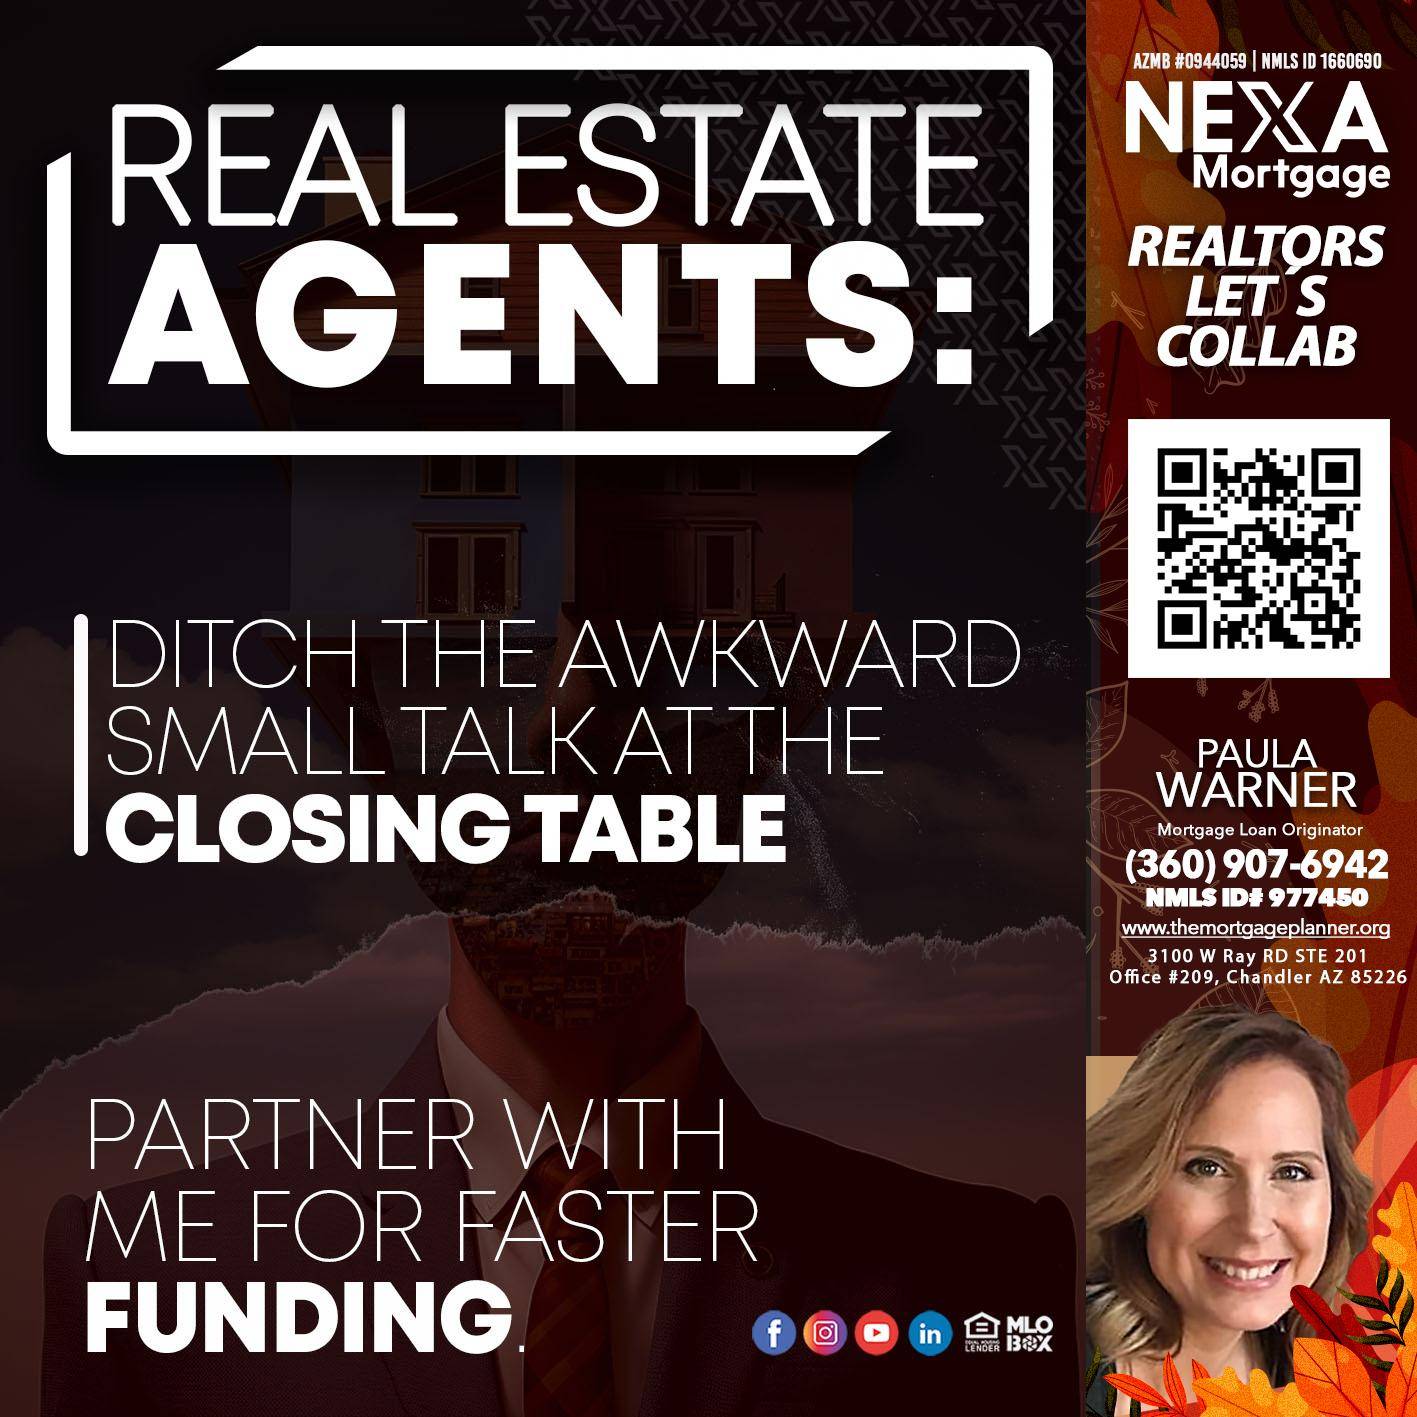 REALTORS LETS COLLAB - Paula Warner -Mortgage Loan Originator